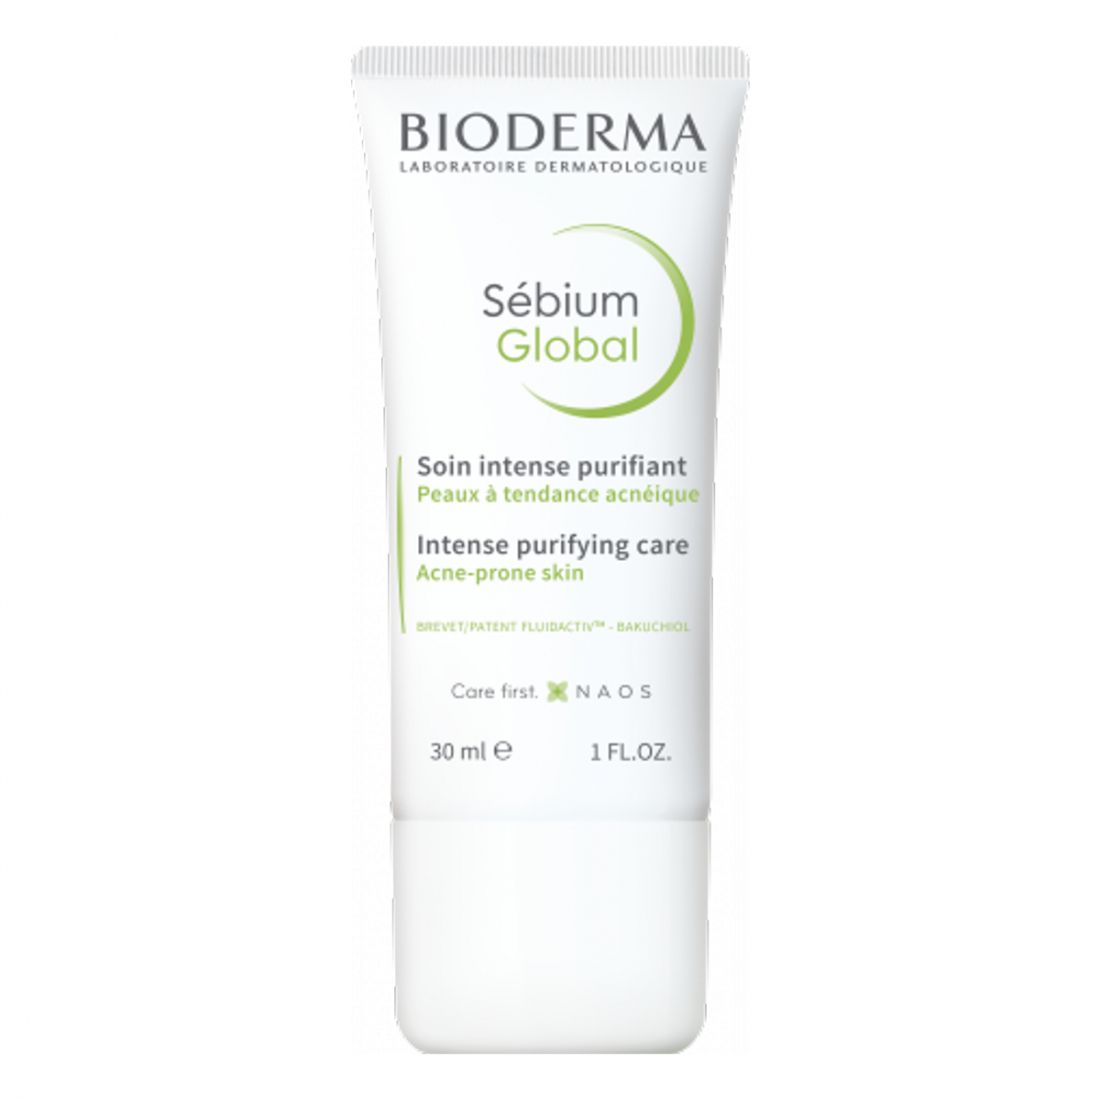 Bioderma - Crème visage 'Sébium Global' - 30 ml